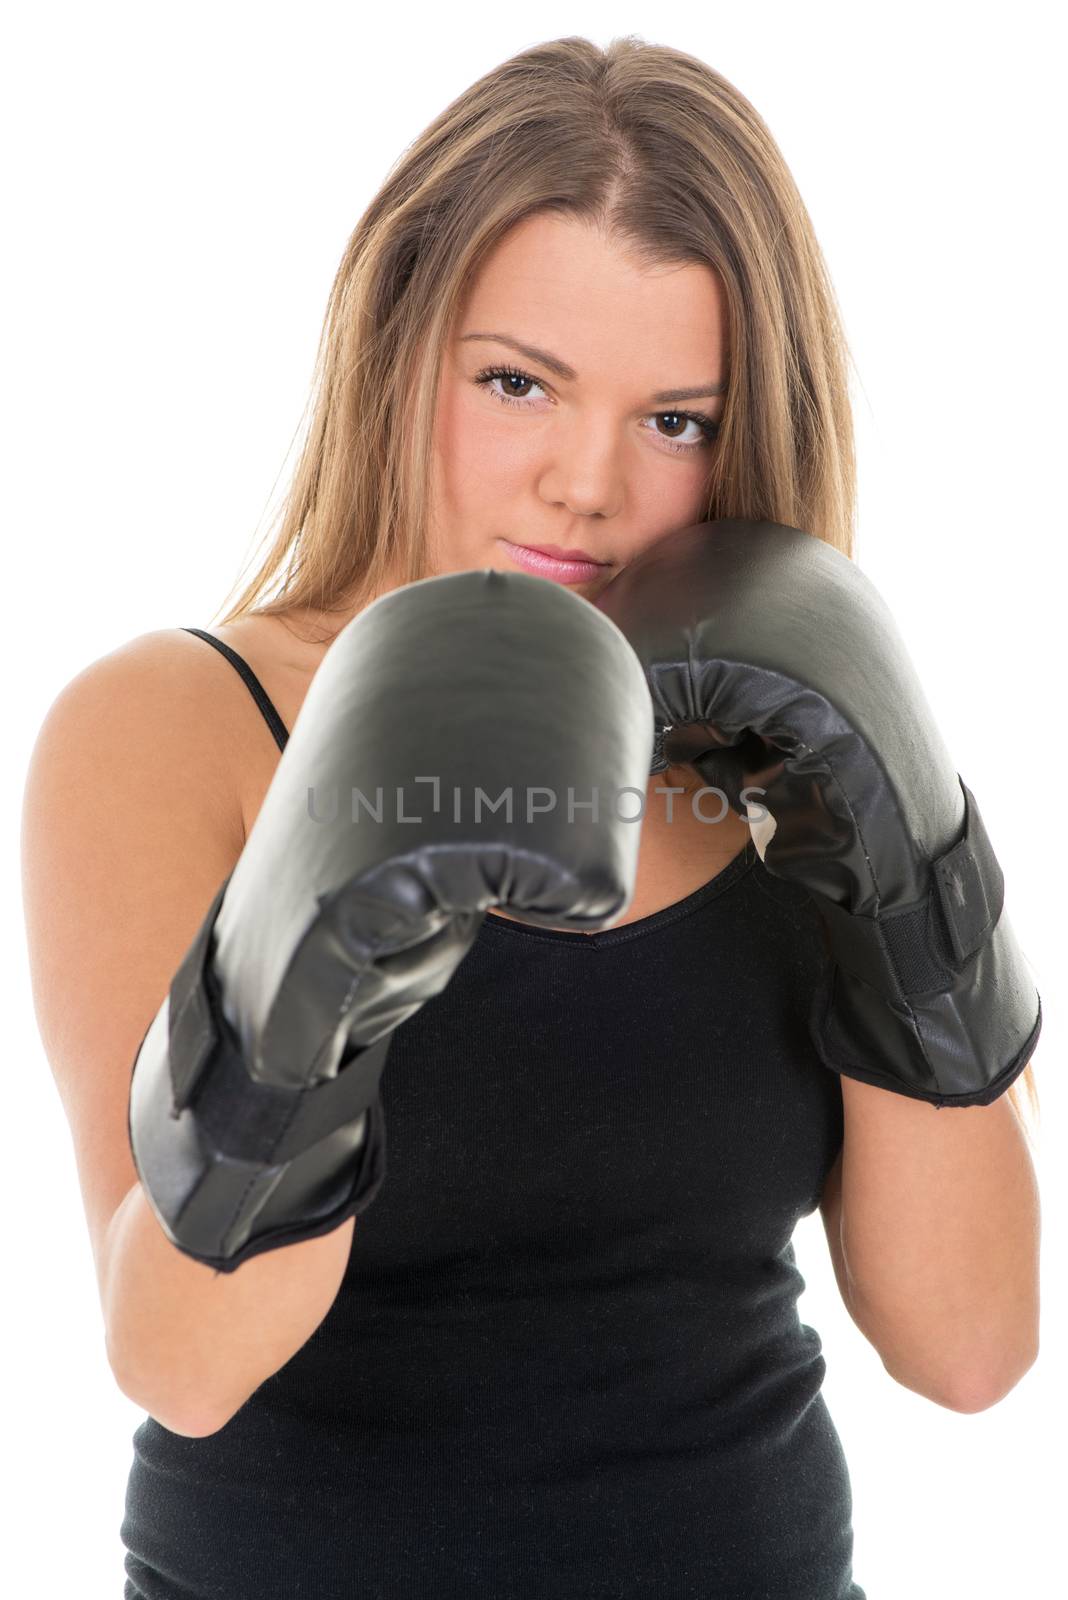 Boxing woman by MilanMarkovic78